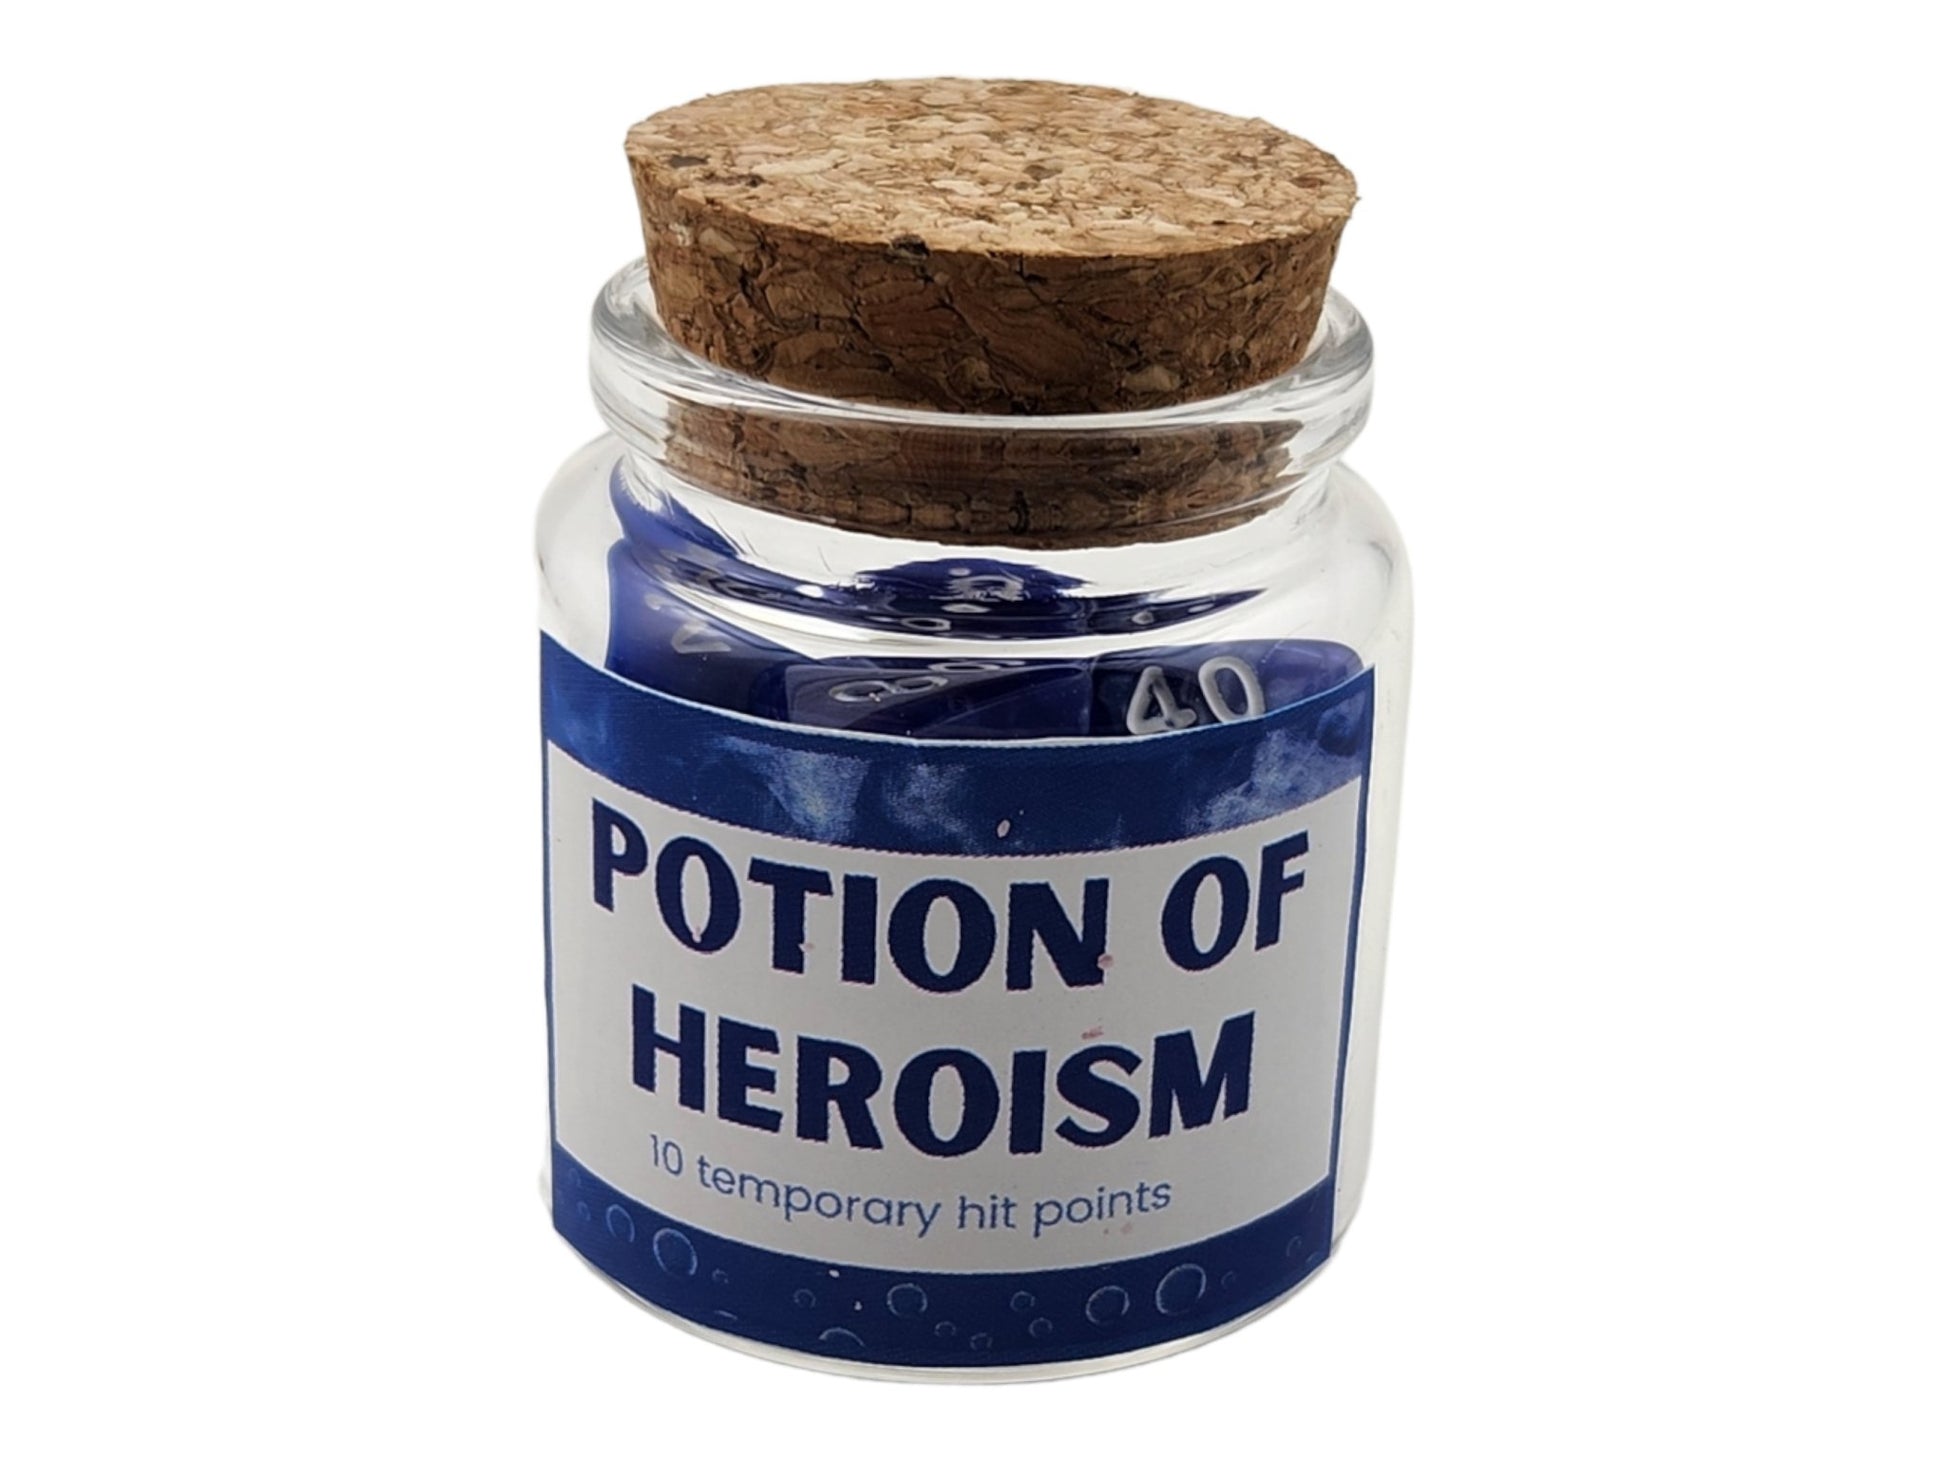 Heroism dice jar potion - Rowan Gate